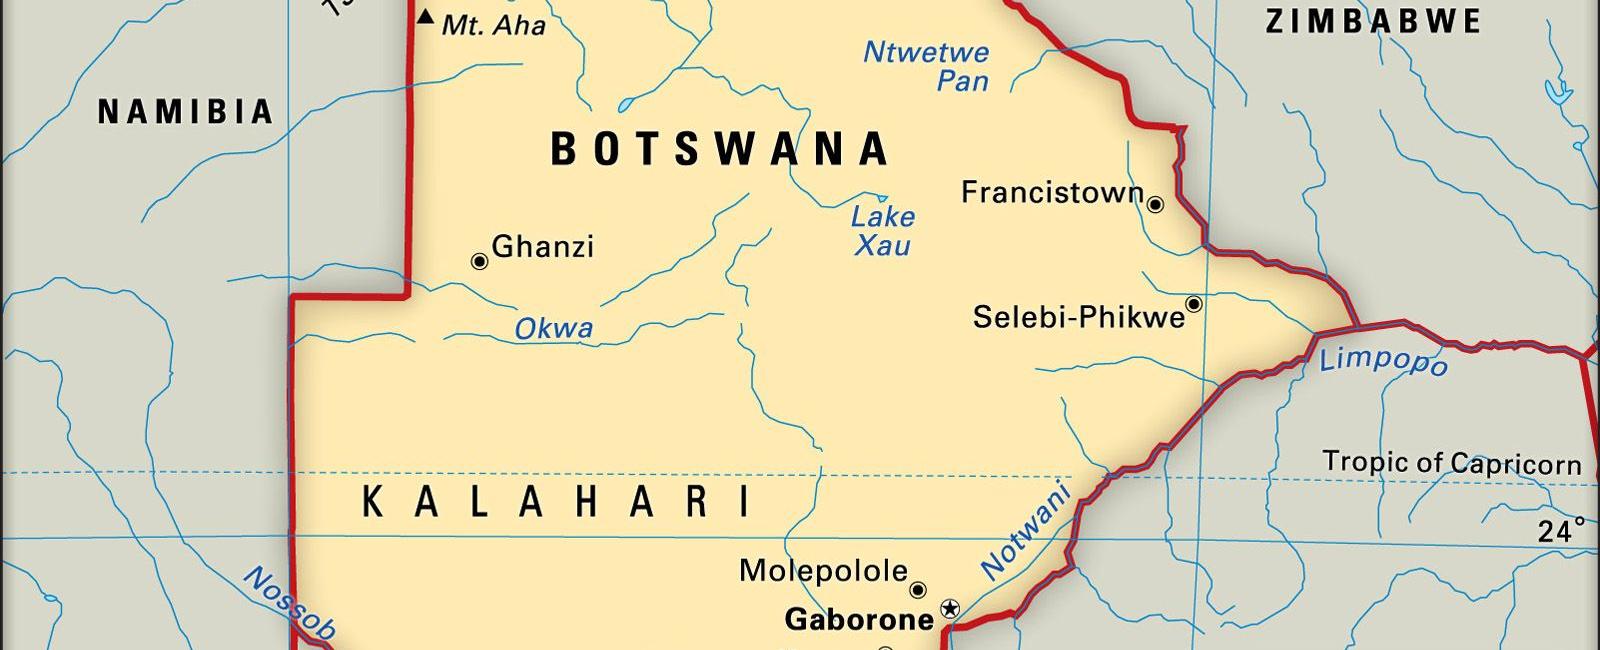 Botswana has a language made entirely of clicks